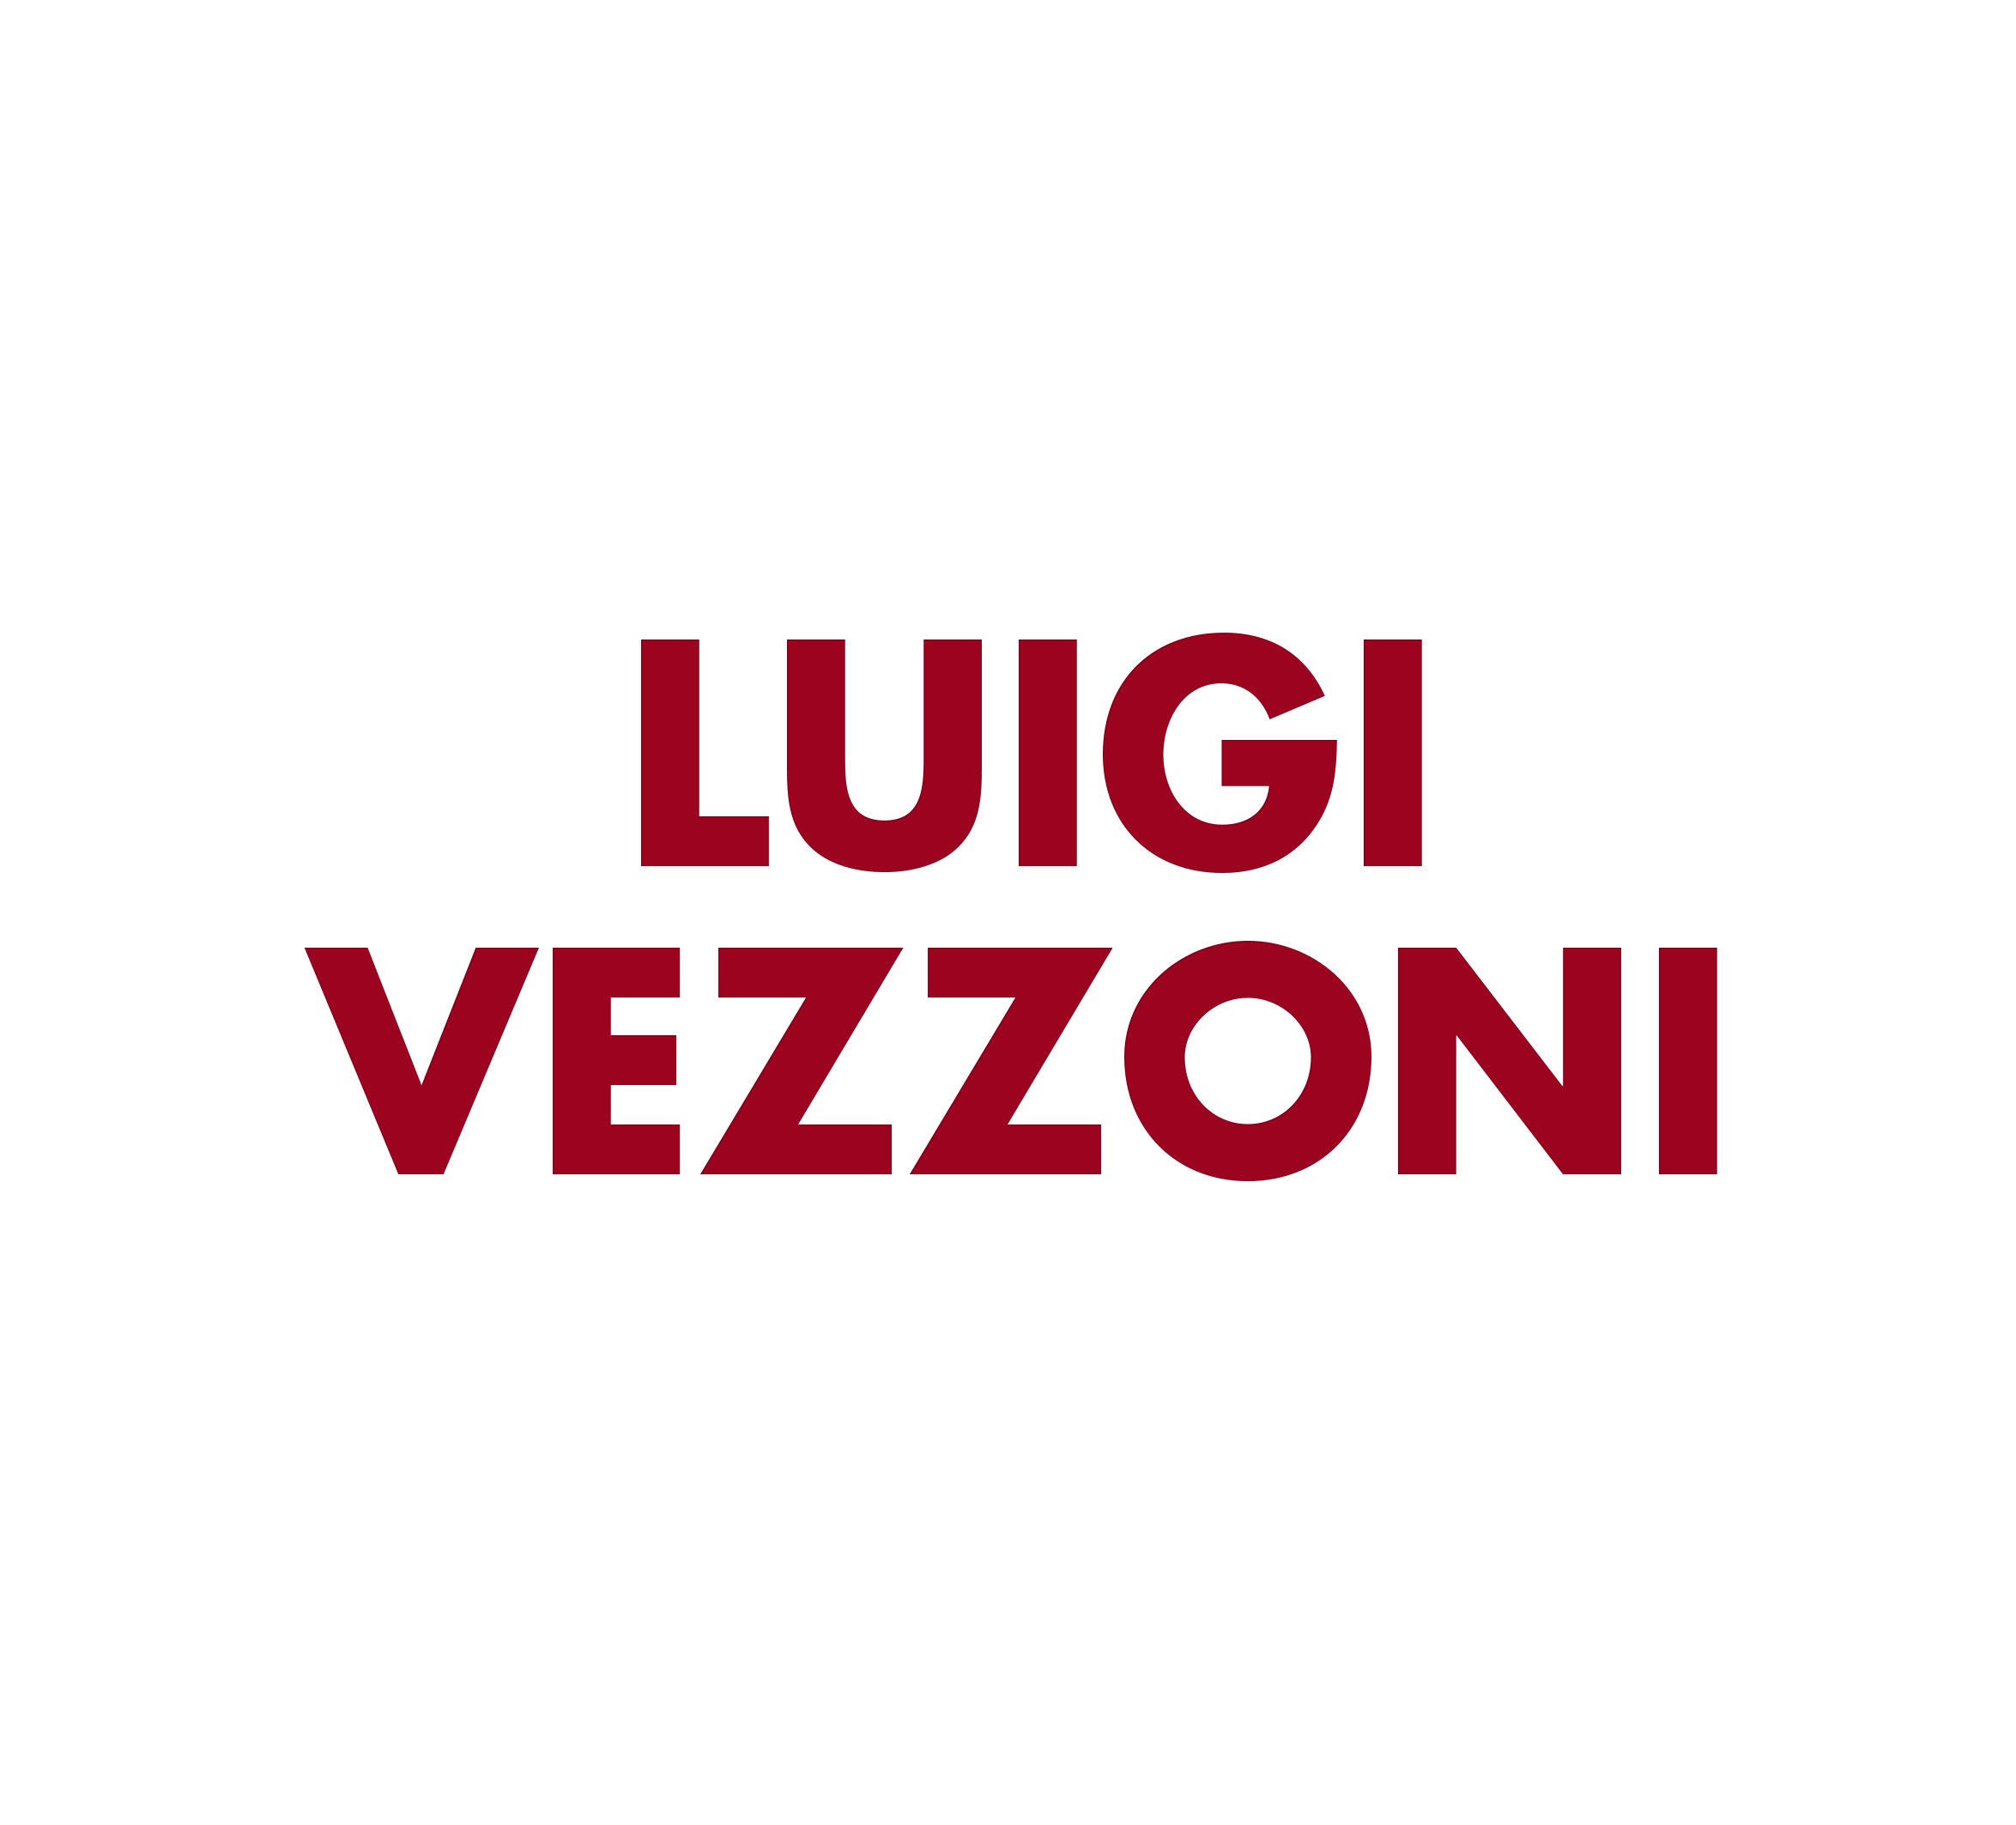 Luigi Vezzoni